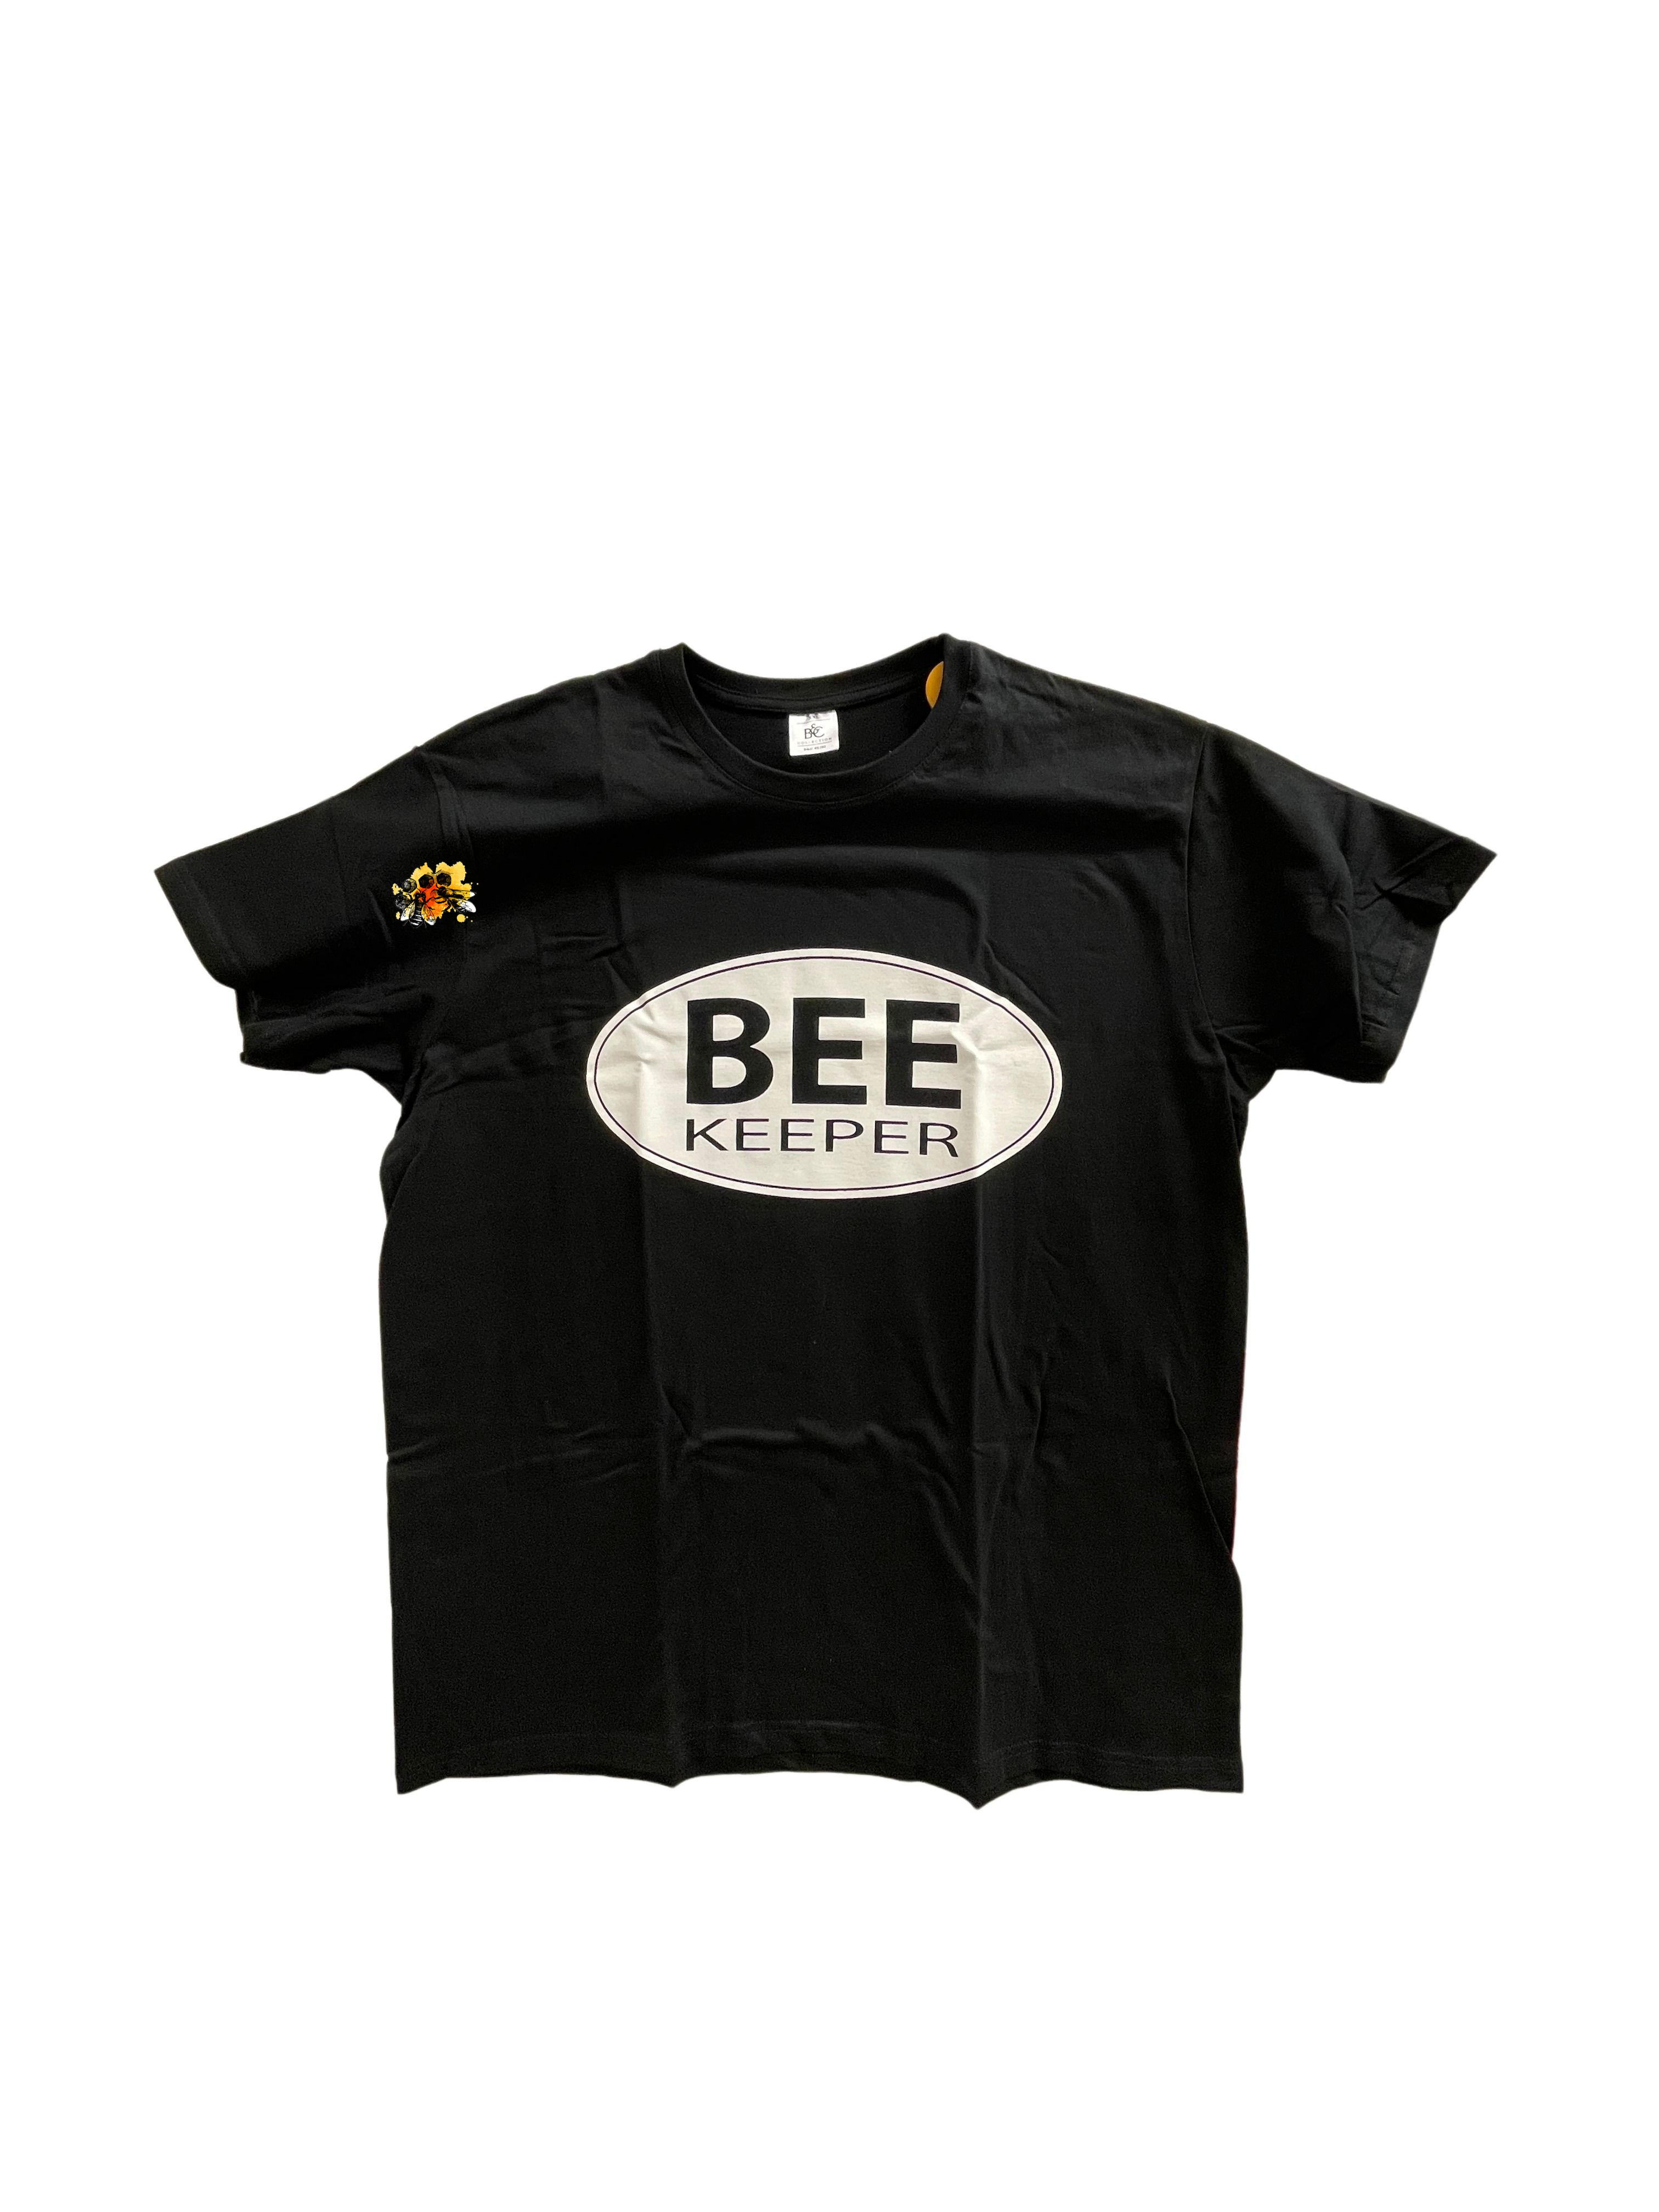 Imkershirt "Bee Keeper", schwarz